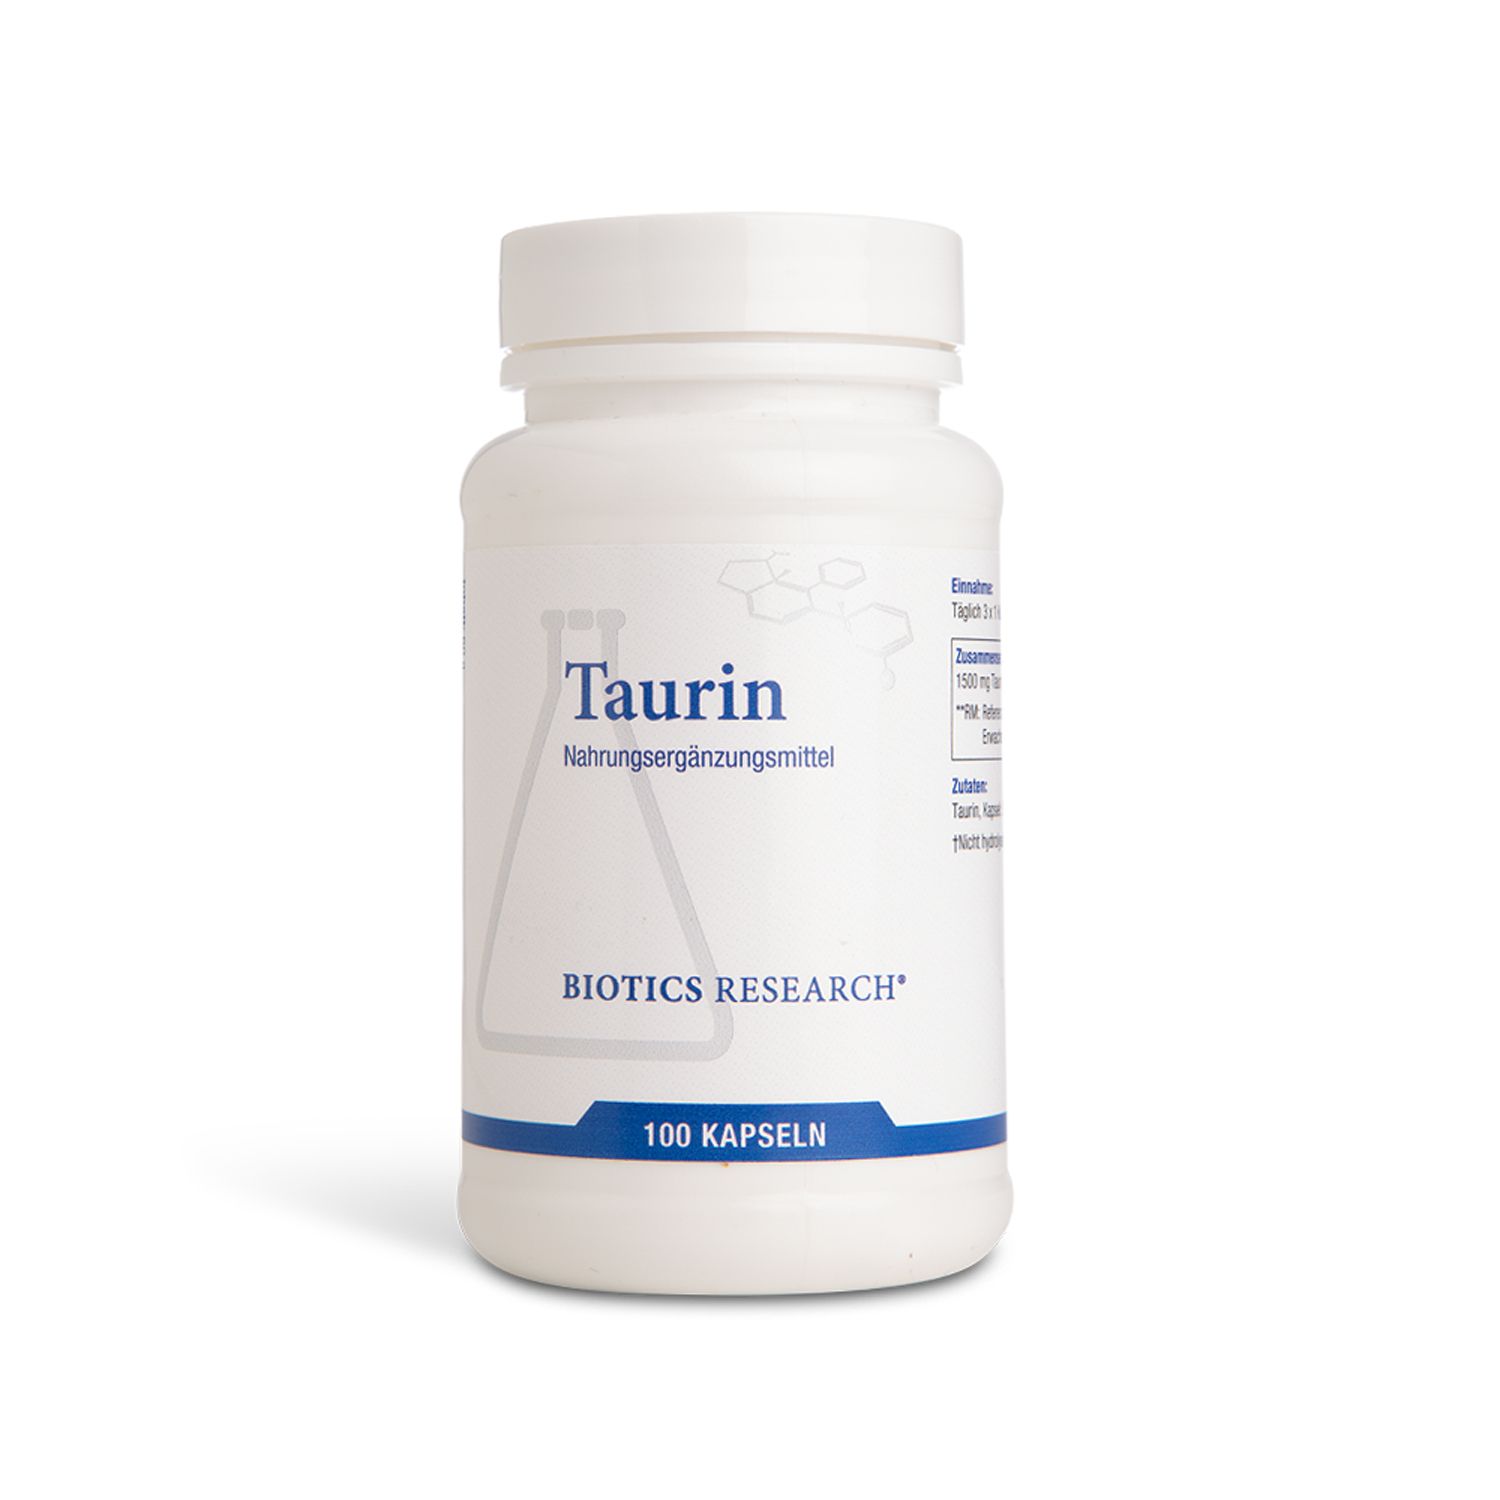 Biotics Research® Taurin